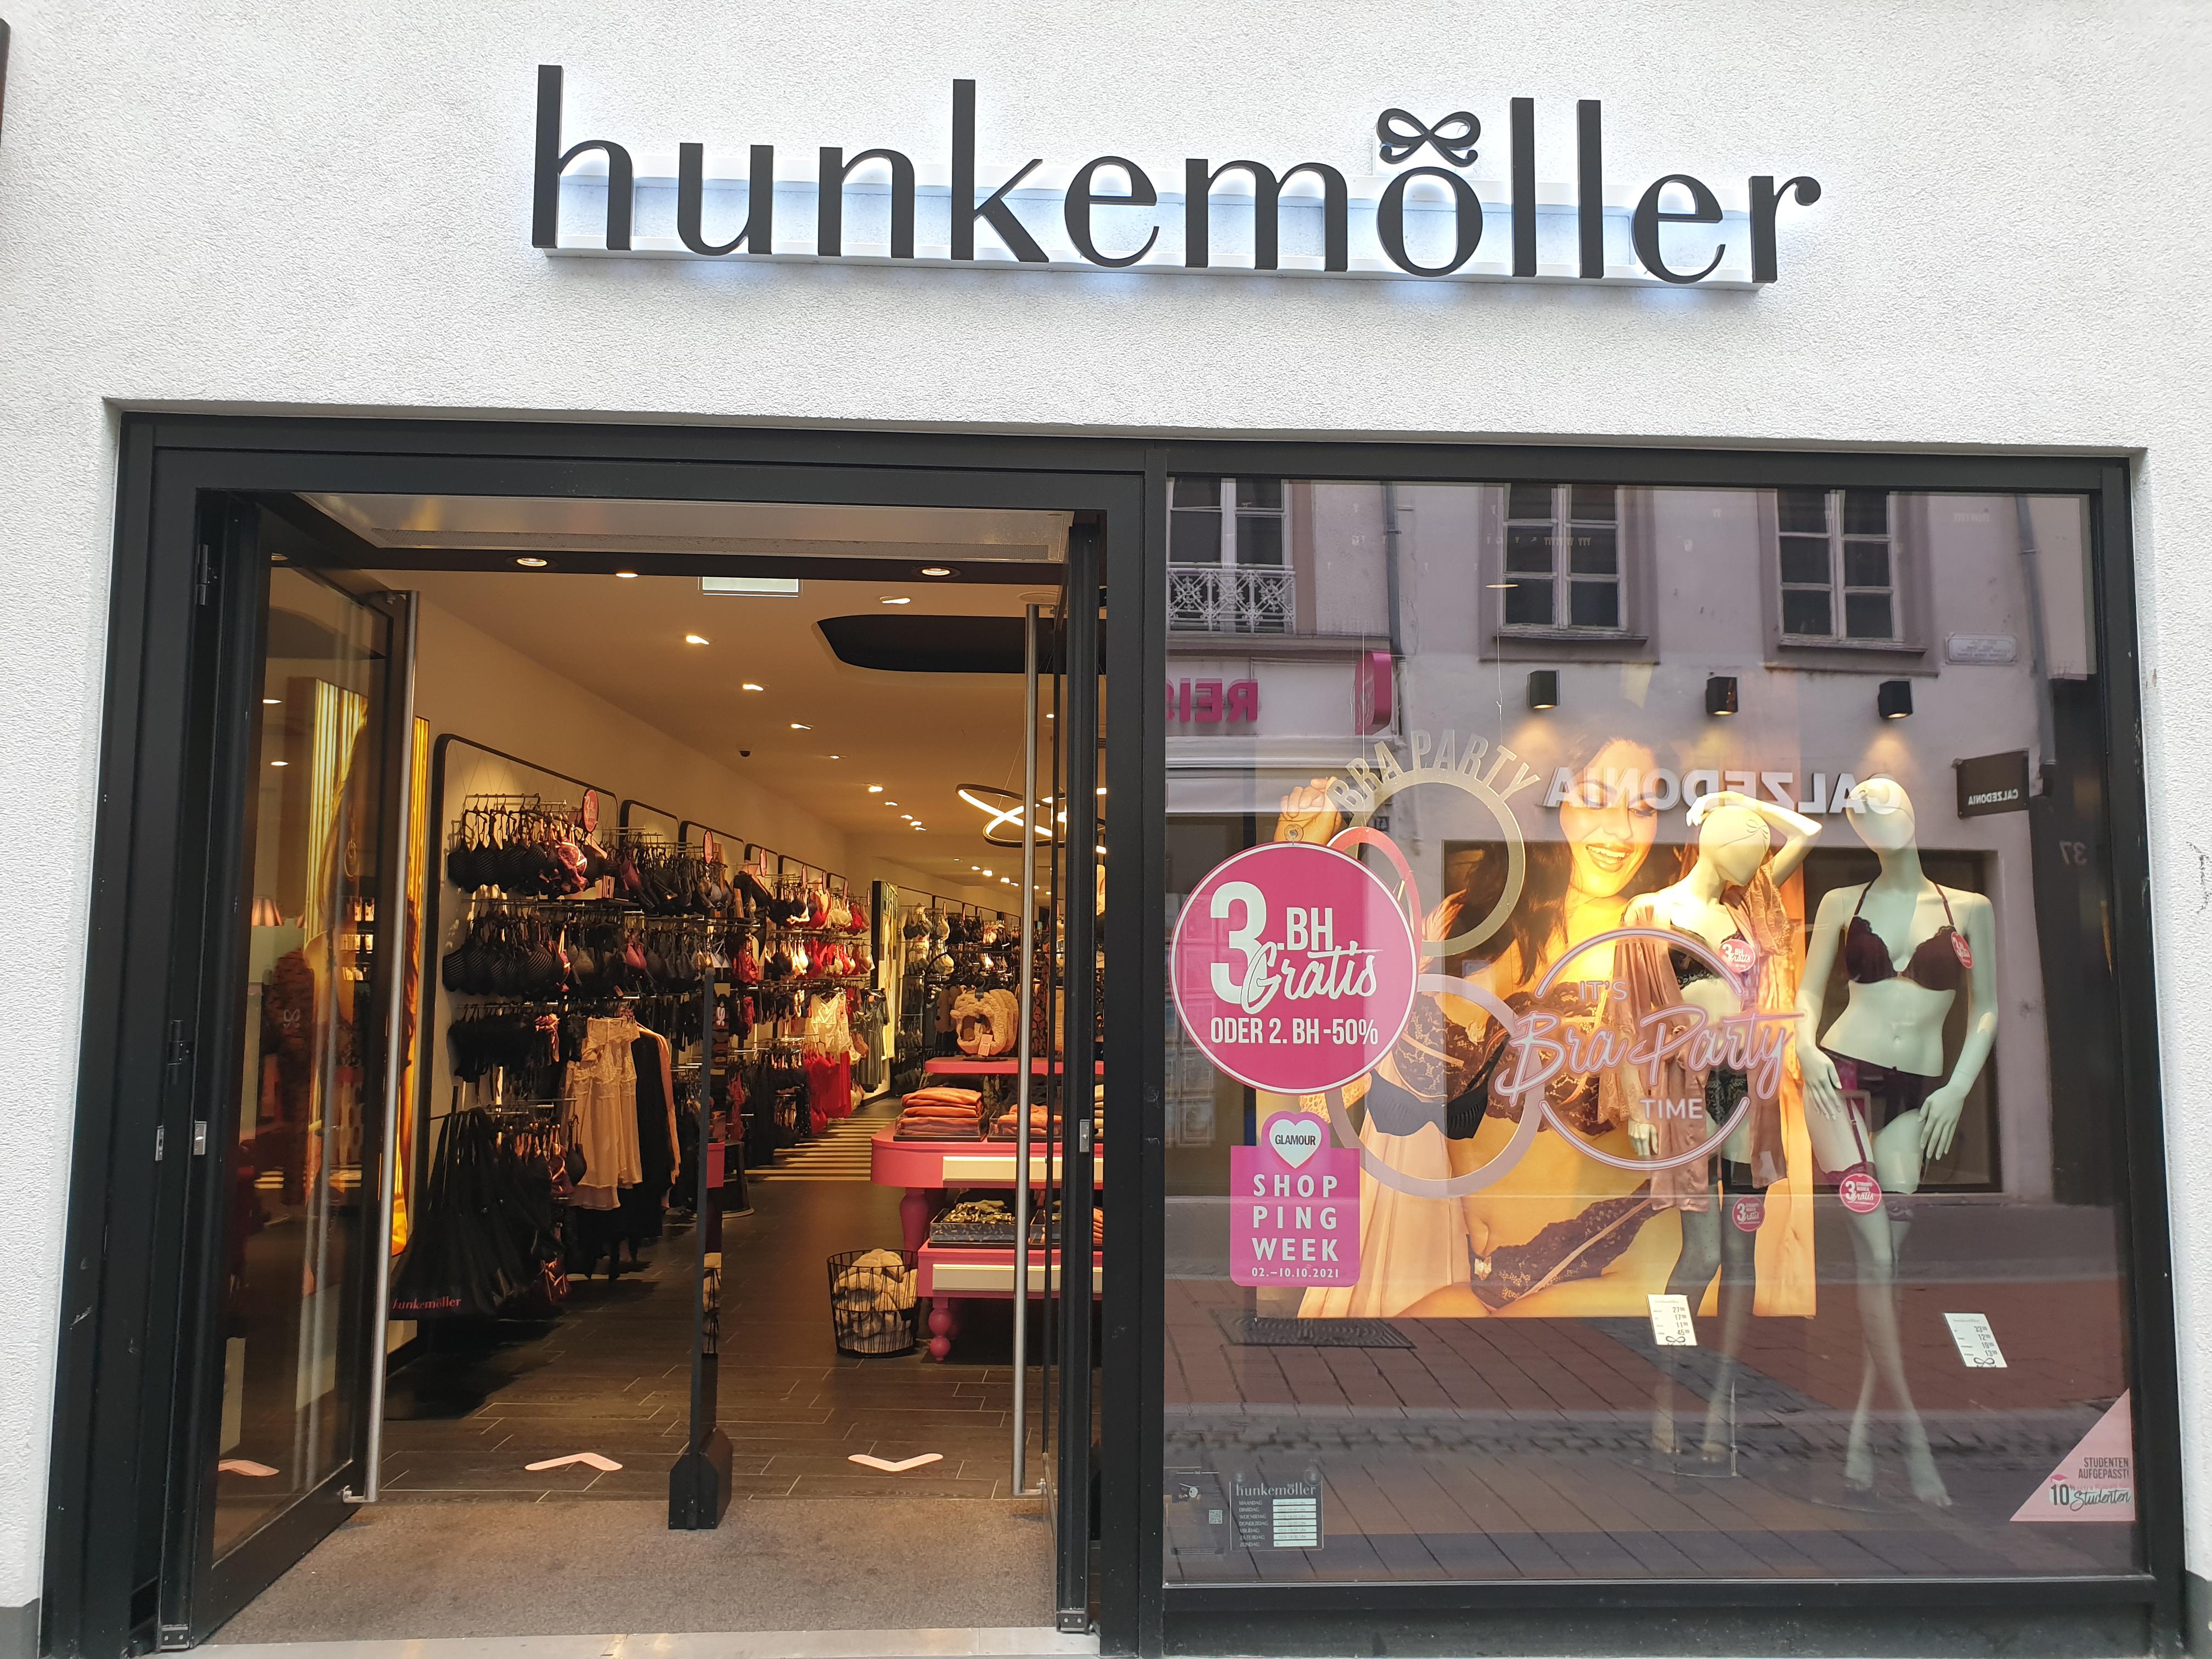 Hunkemöller, Sternstraße 48 in Bonn